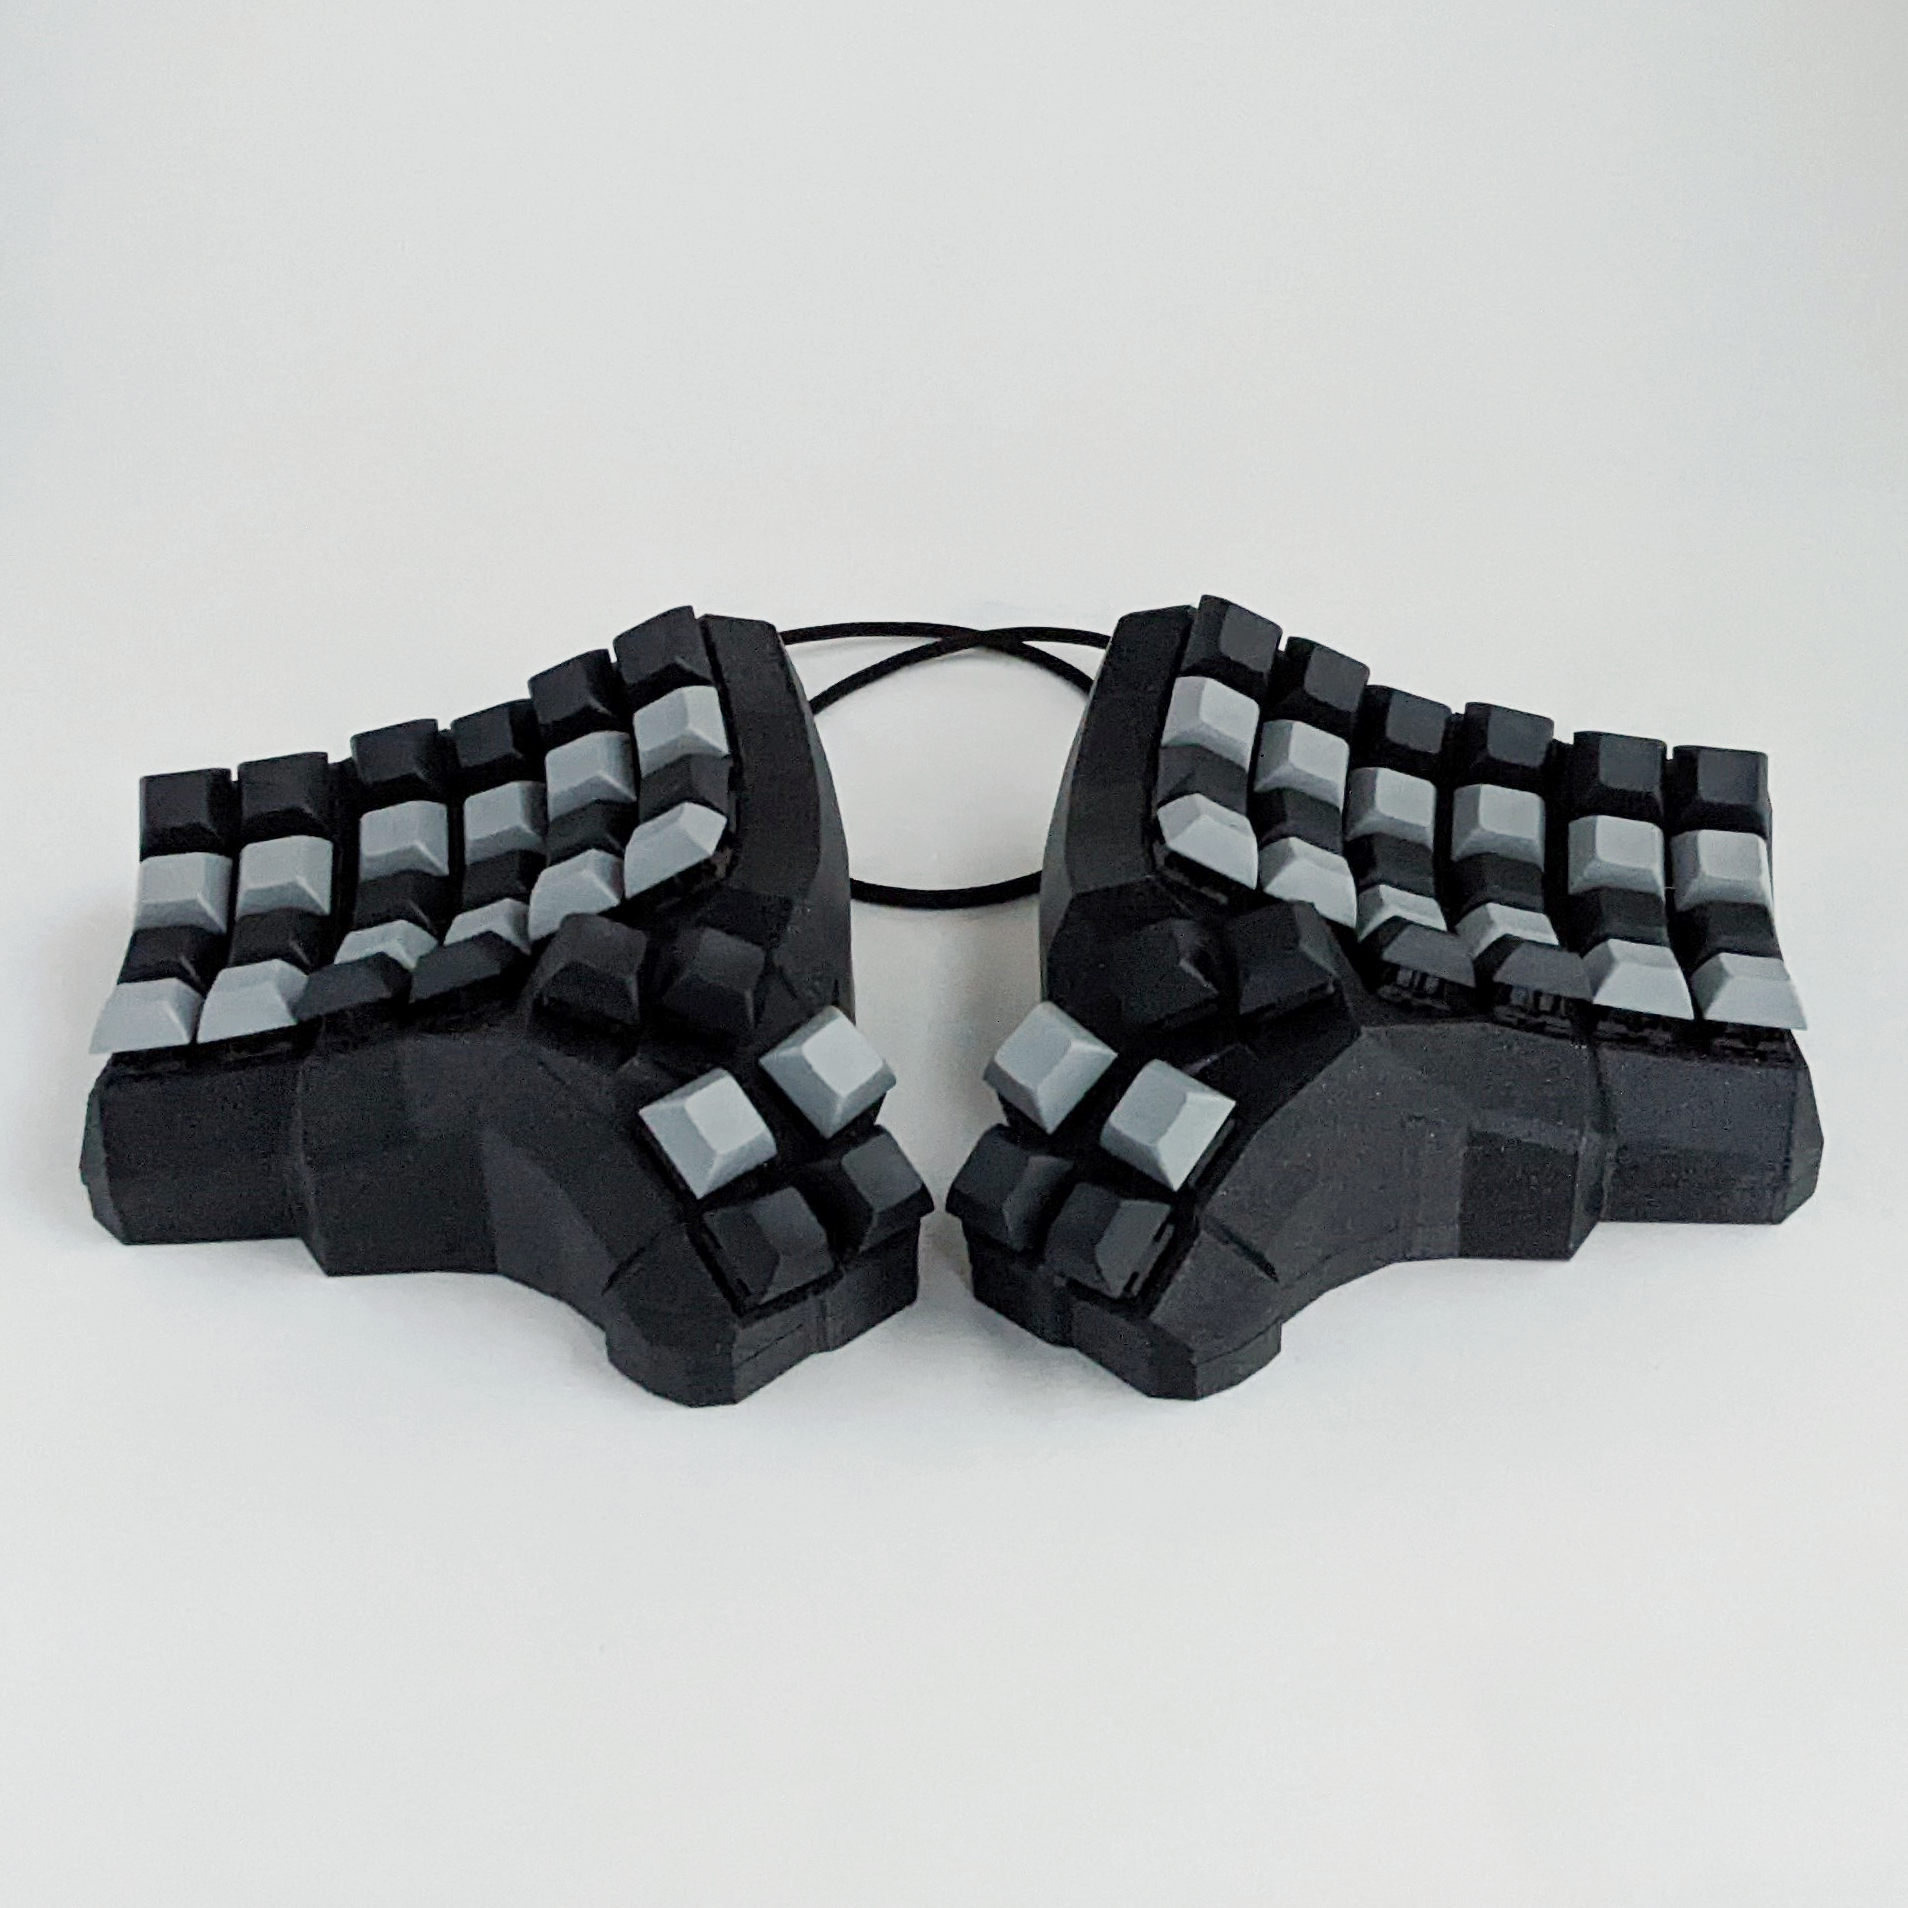 taikohub ergonomic split hotswappable mechanical keyboard size large in black 2022